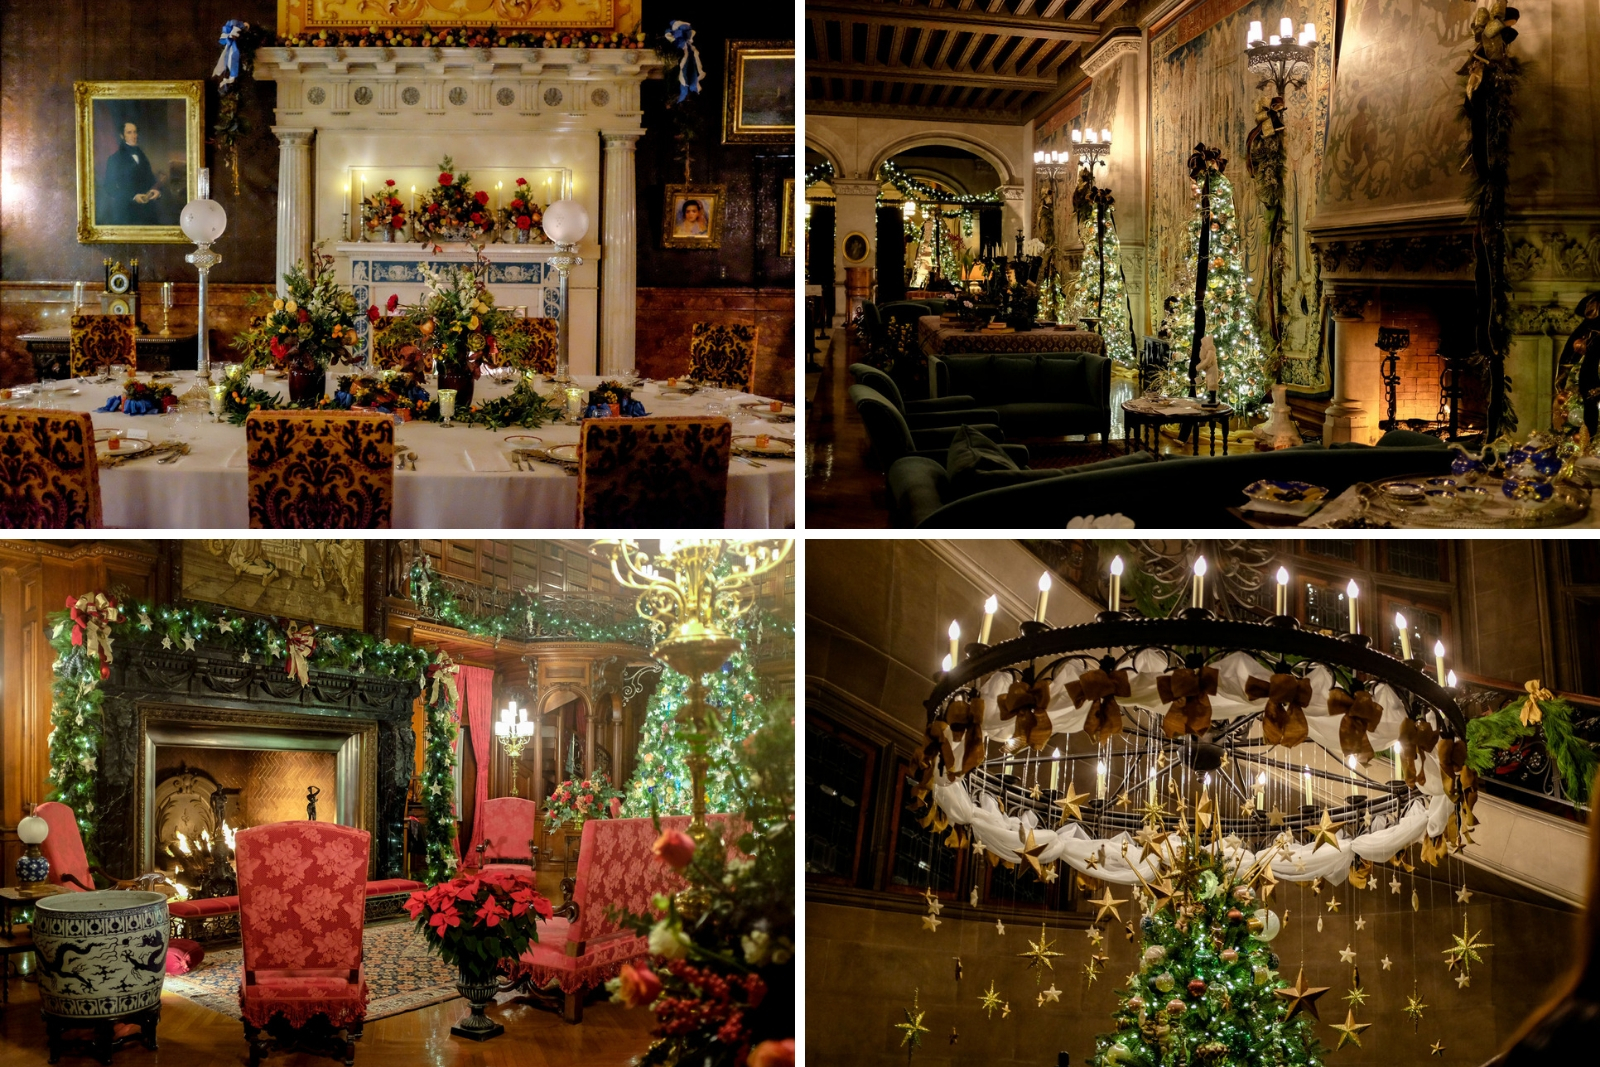 Ornate Christmas decor at the Biltmore Estate in Asheville, NC